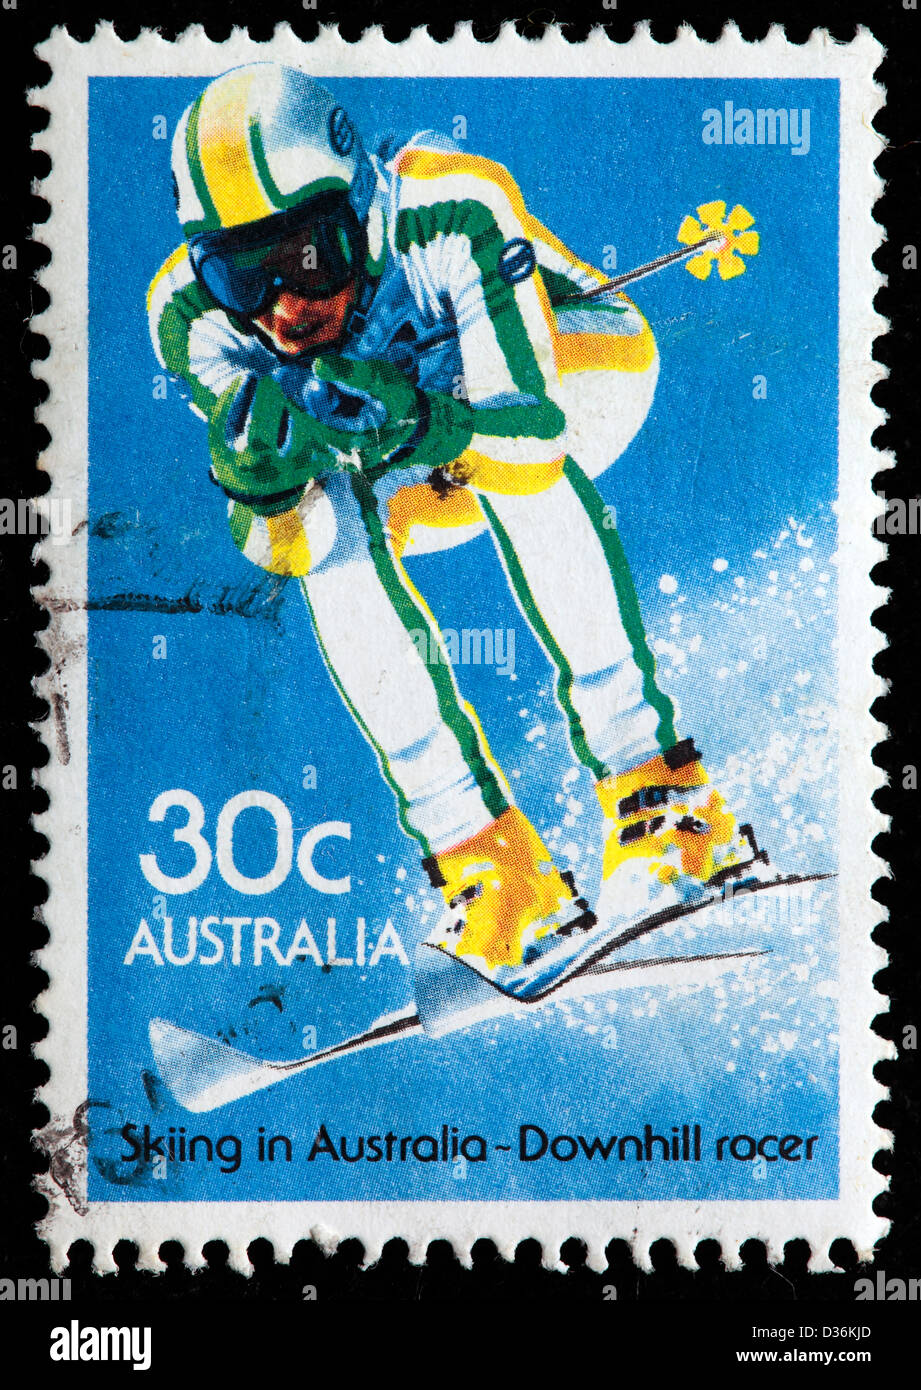 Skiing in Australia, Downhill racer, postage stamp, Australia, 1984 Stock Photo